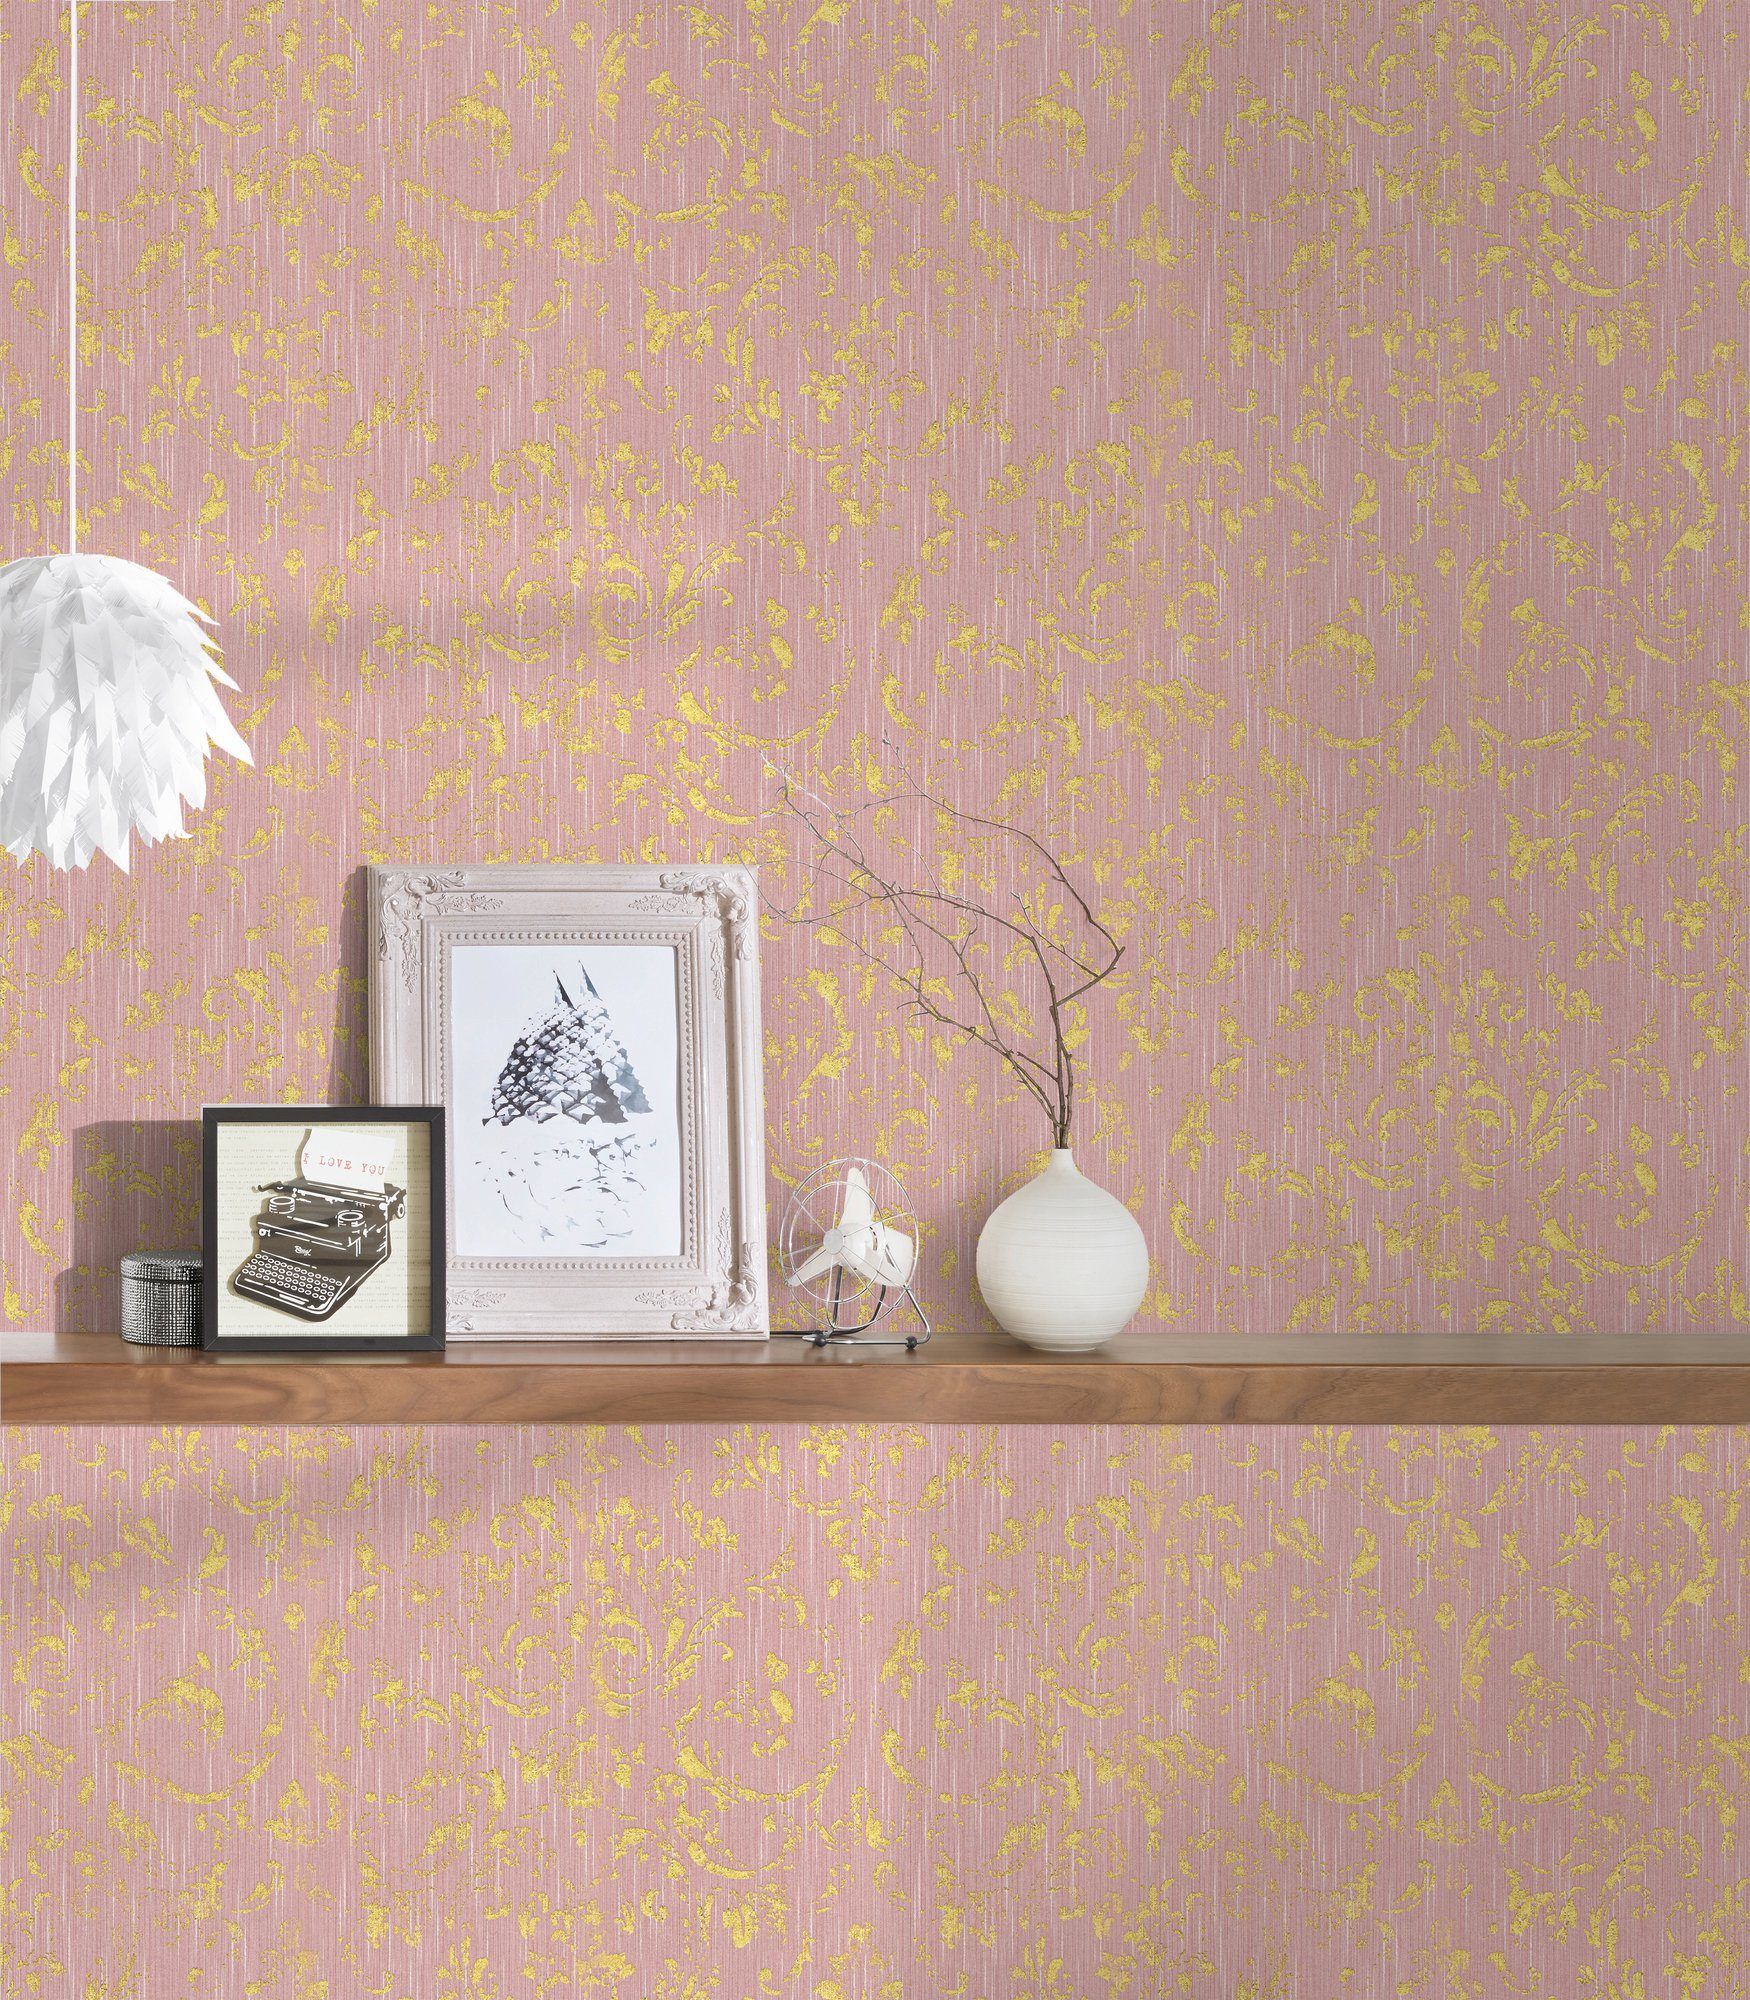 Tapete Silk, Textiltapete Metallic Barock, rosa/gold glänzend, samtig, Paper Ornament Barock matt, Architects